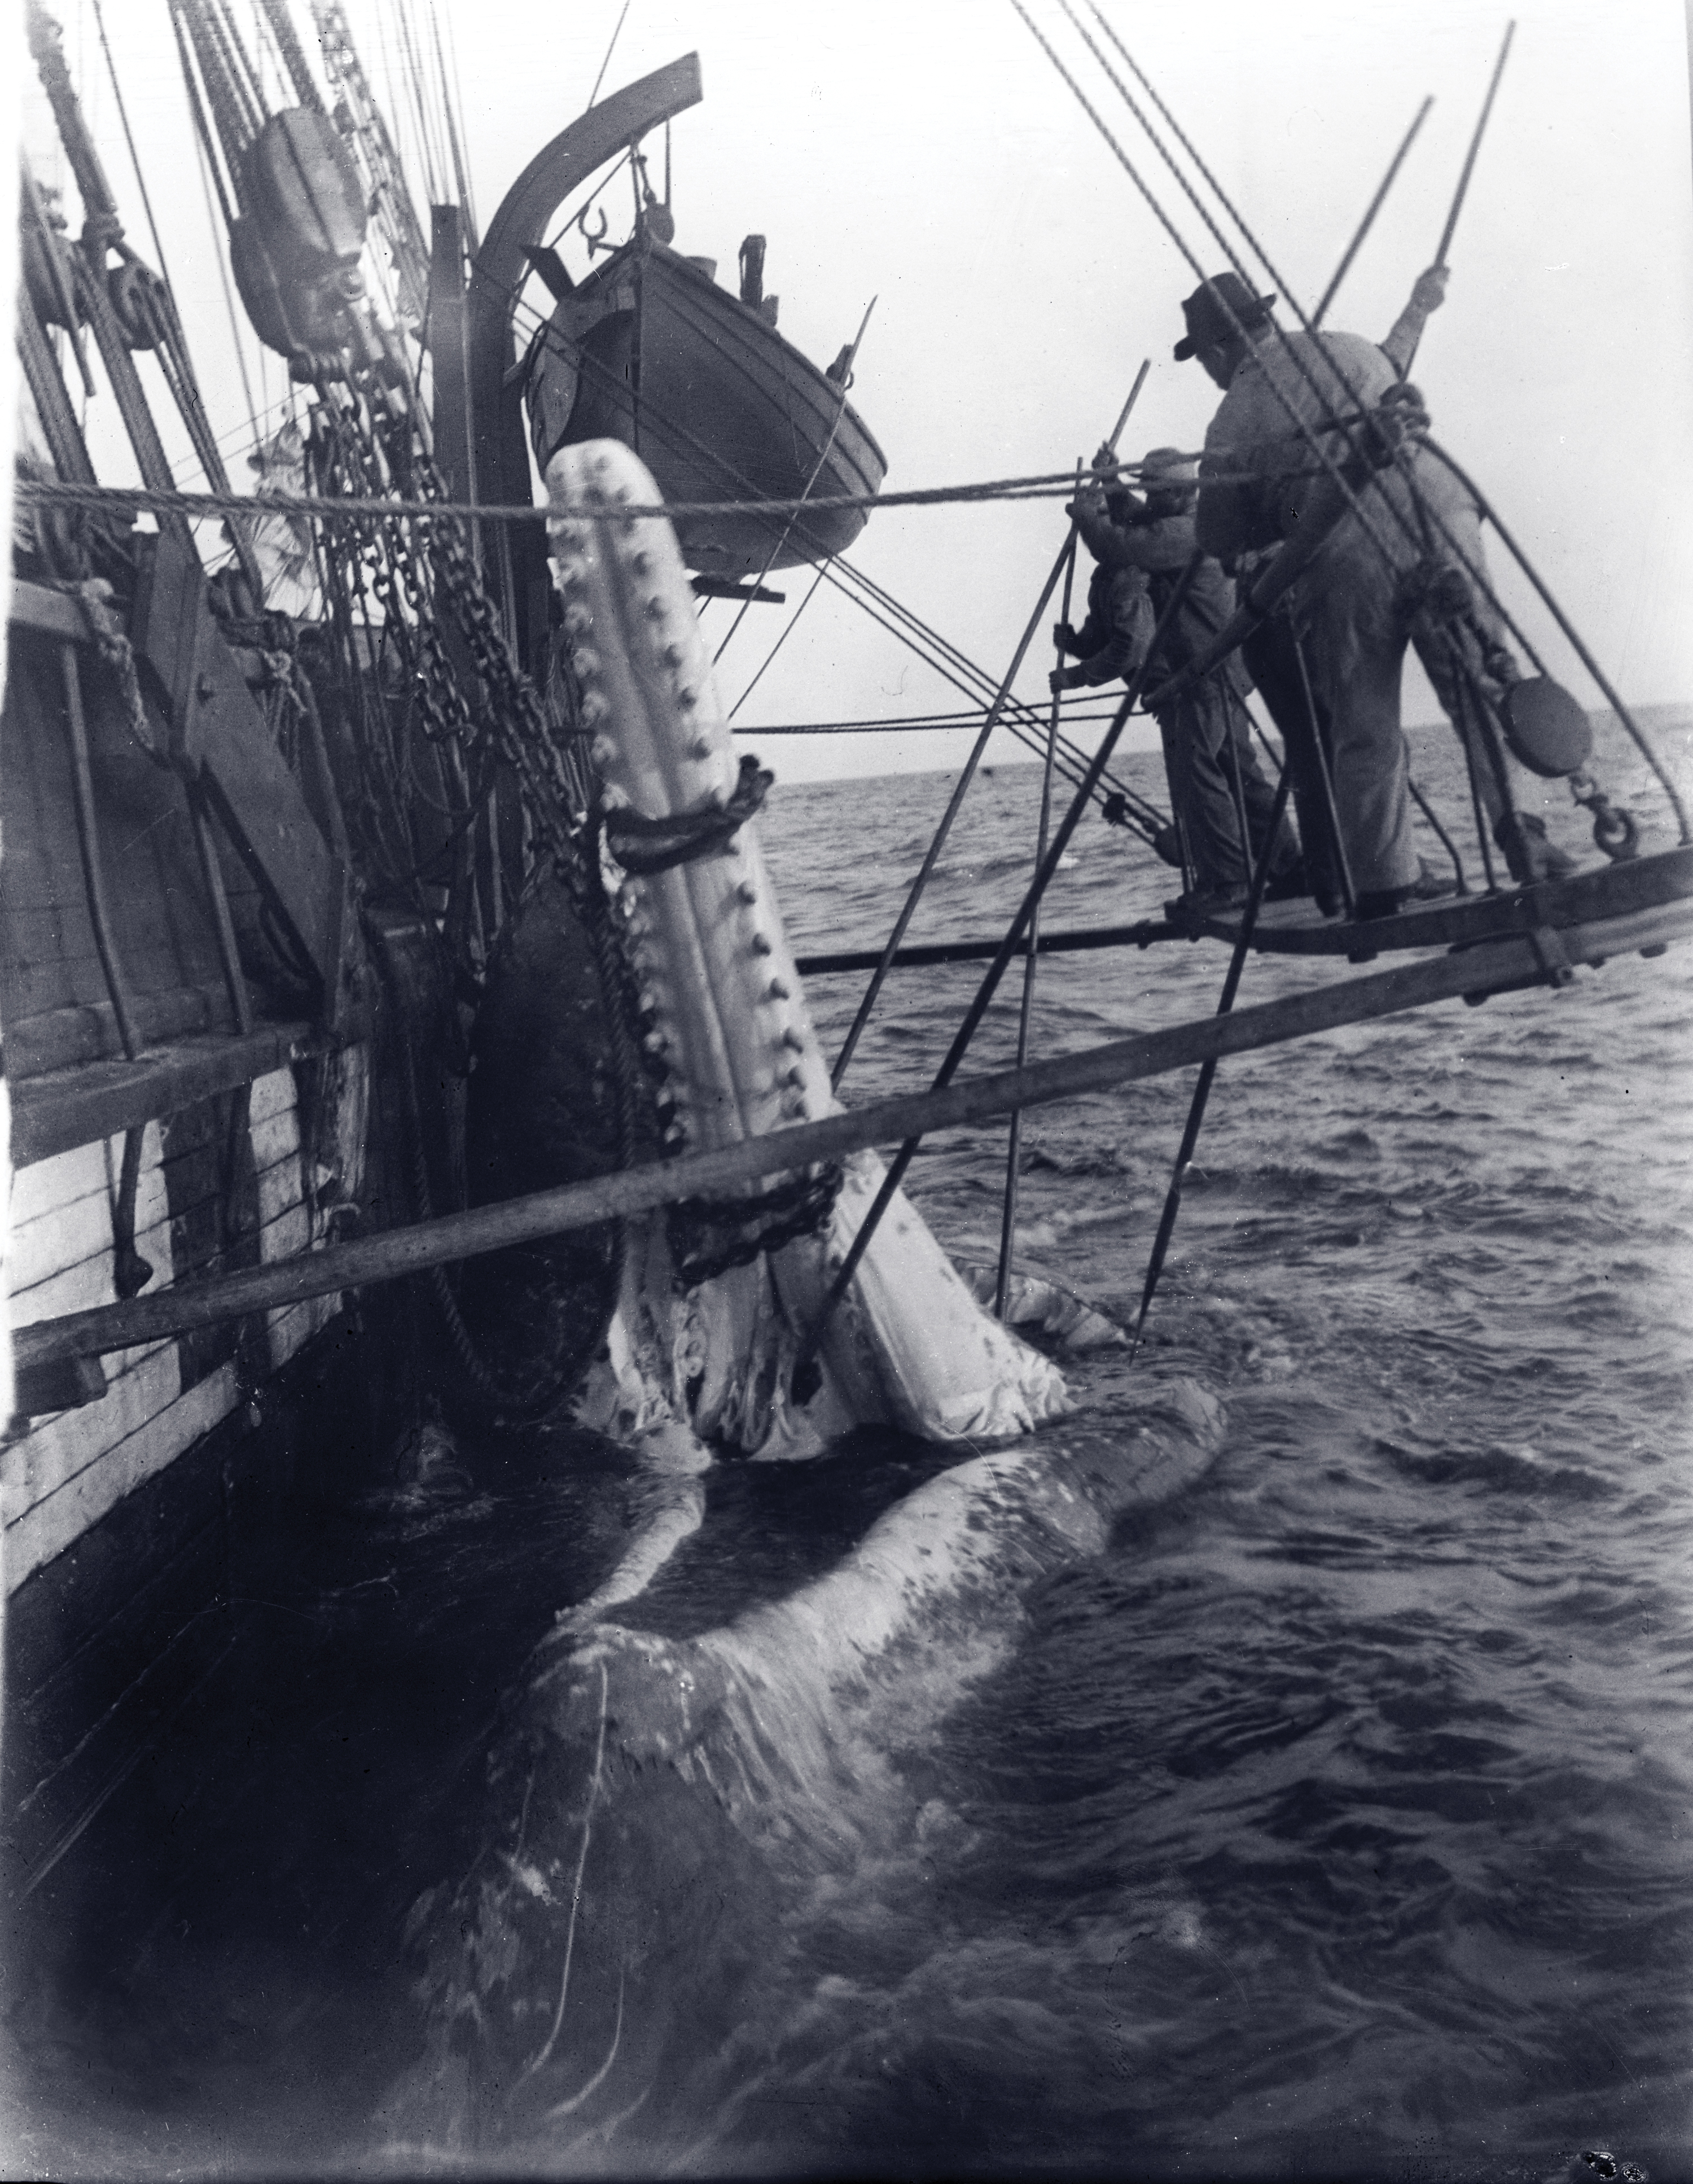 19th century whaling harpoon